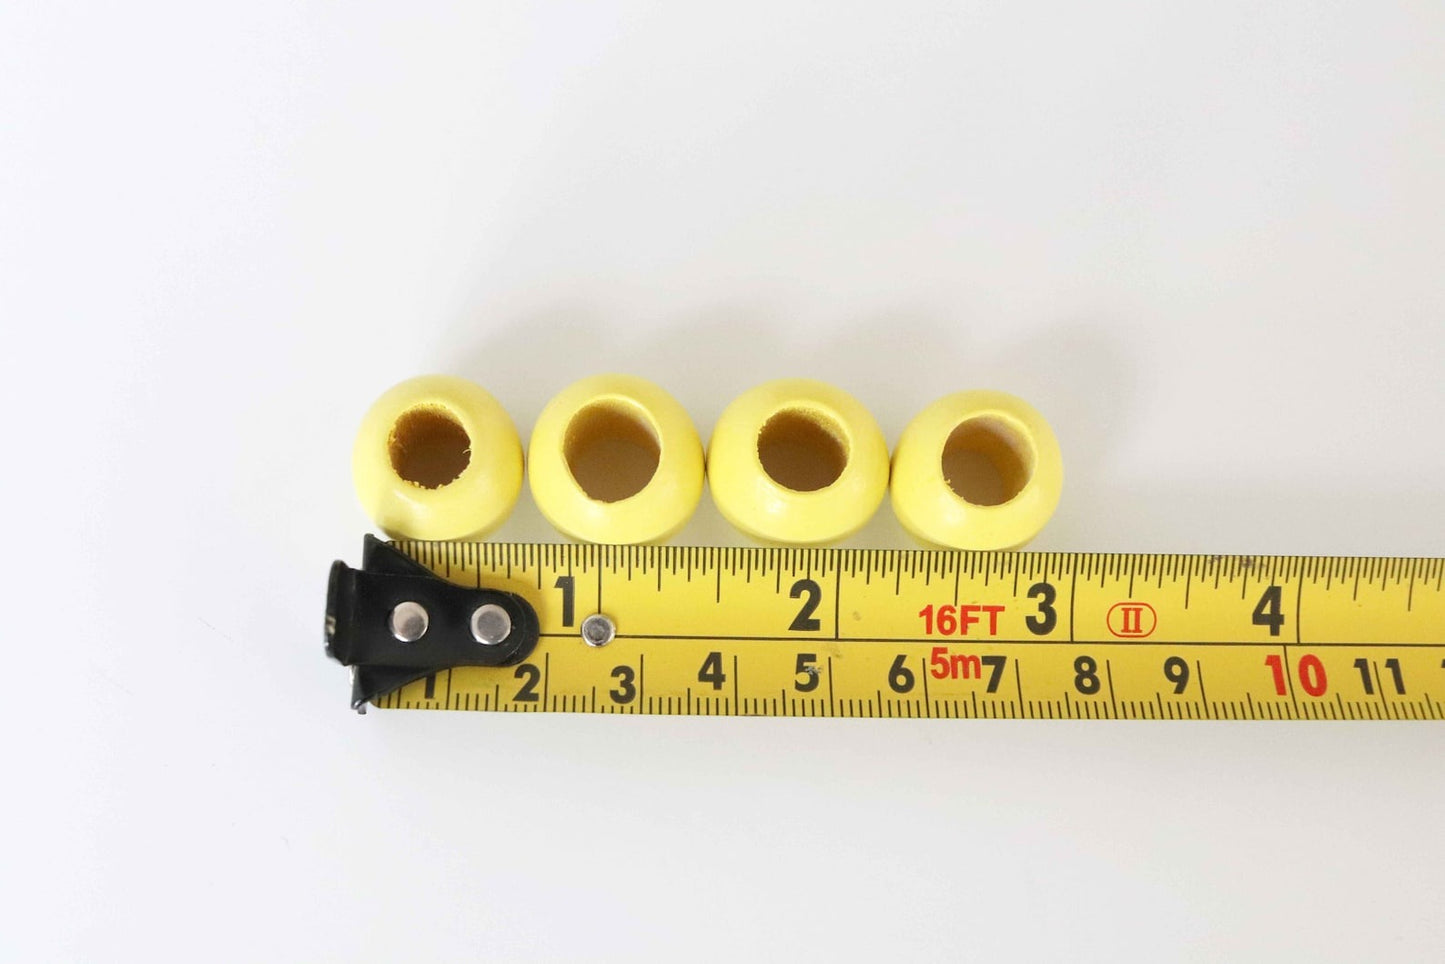 large hole macrame beads with a tape measure